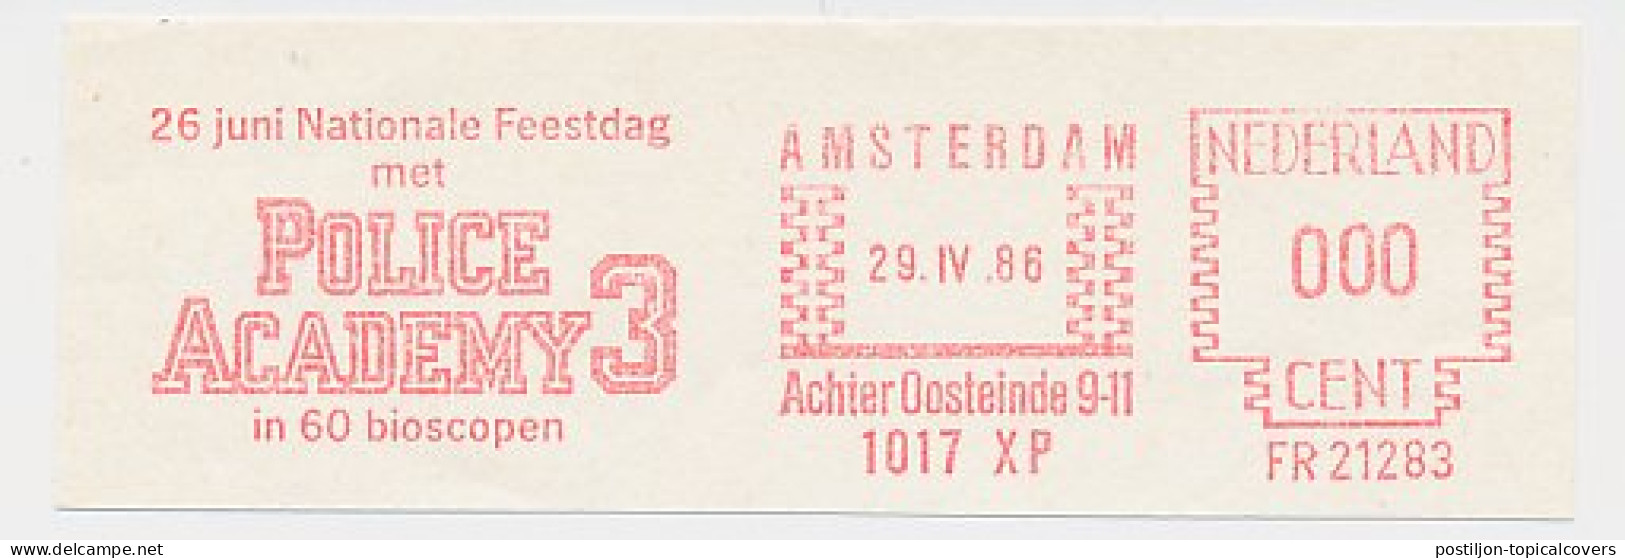 Meter Proof / Test Strip Netherlands 1986- Frama 21283 Police Academy 3 - Movie - Cinéma